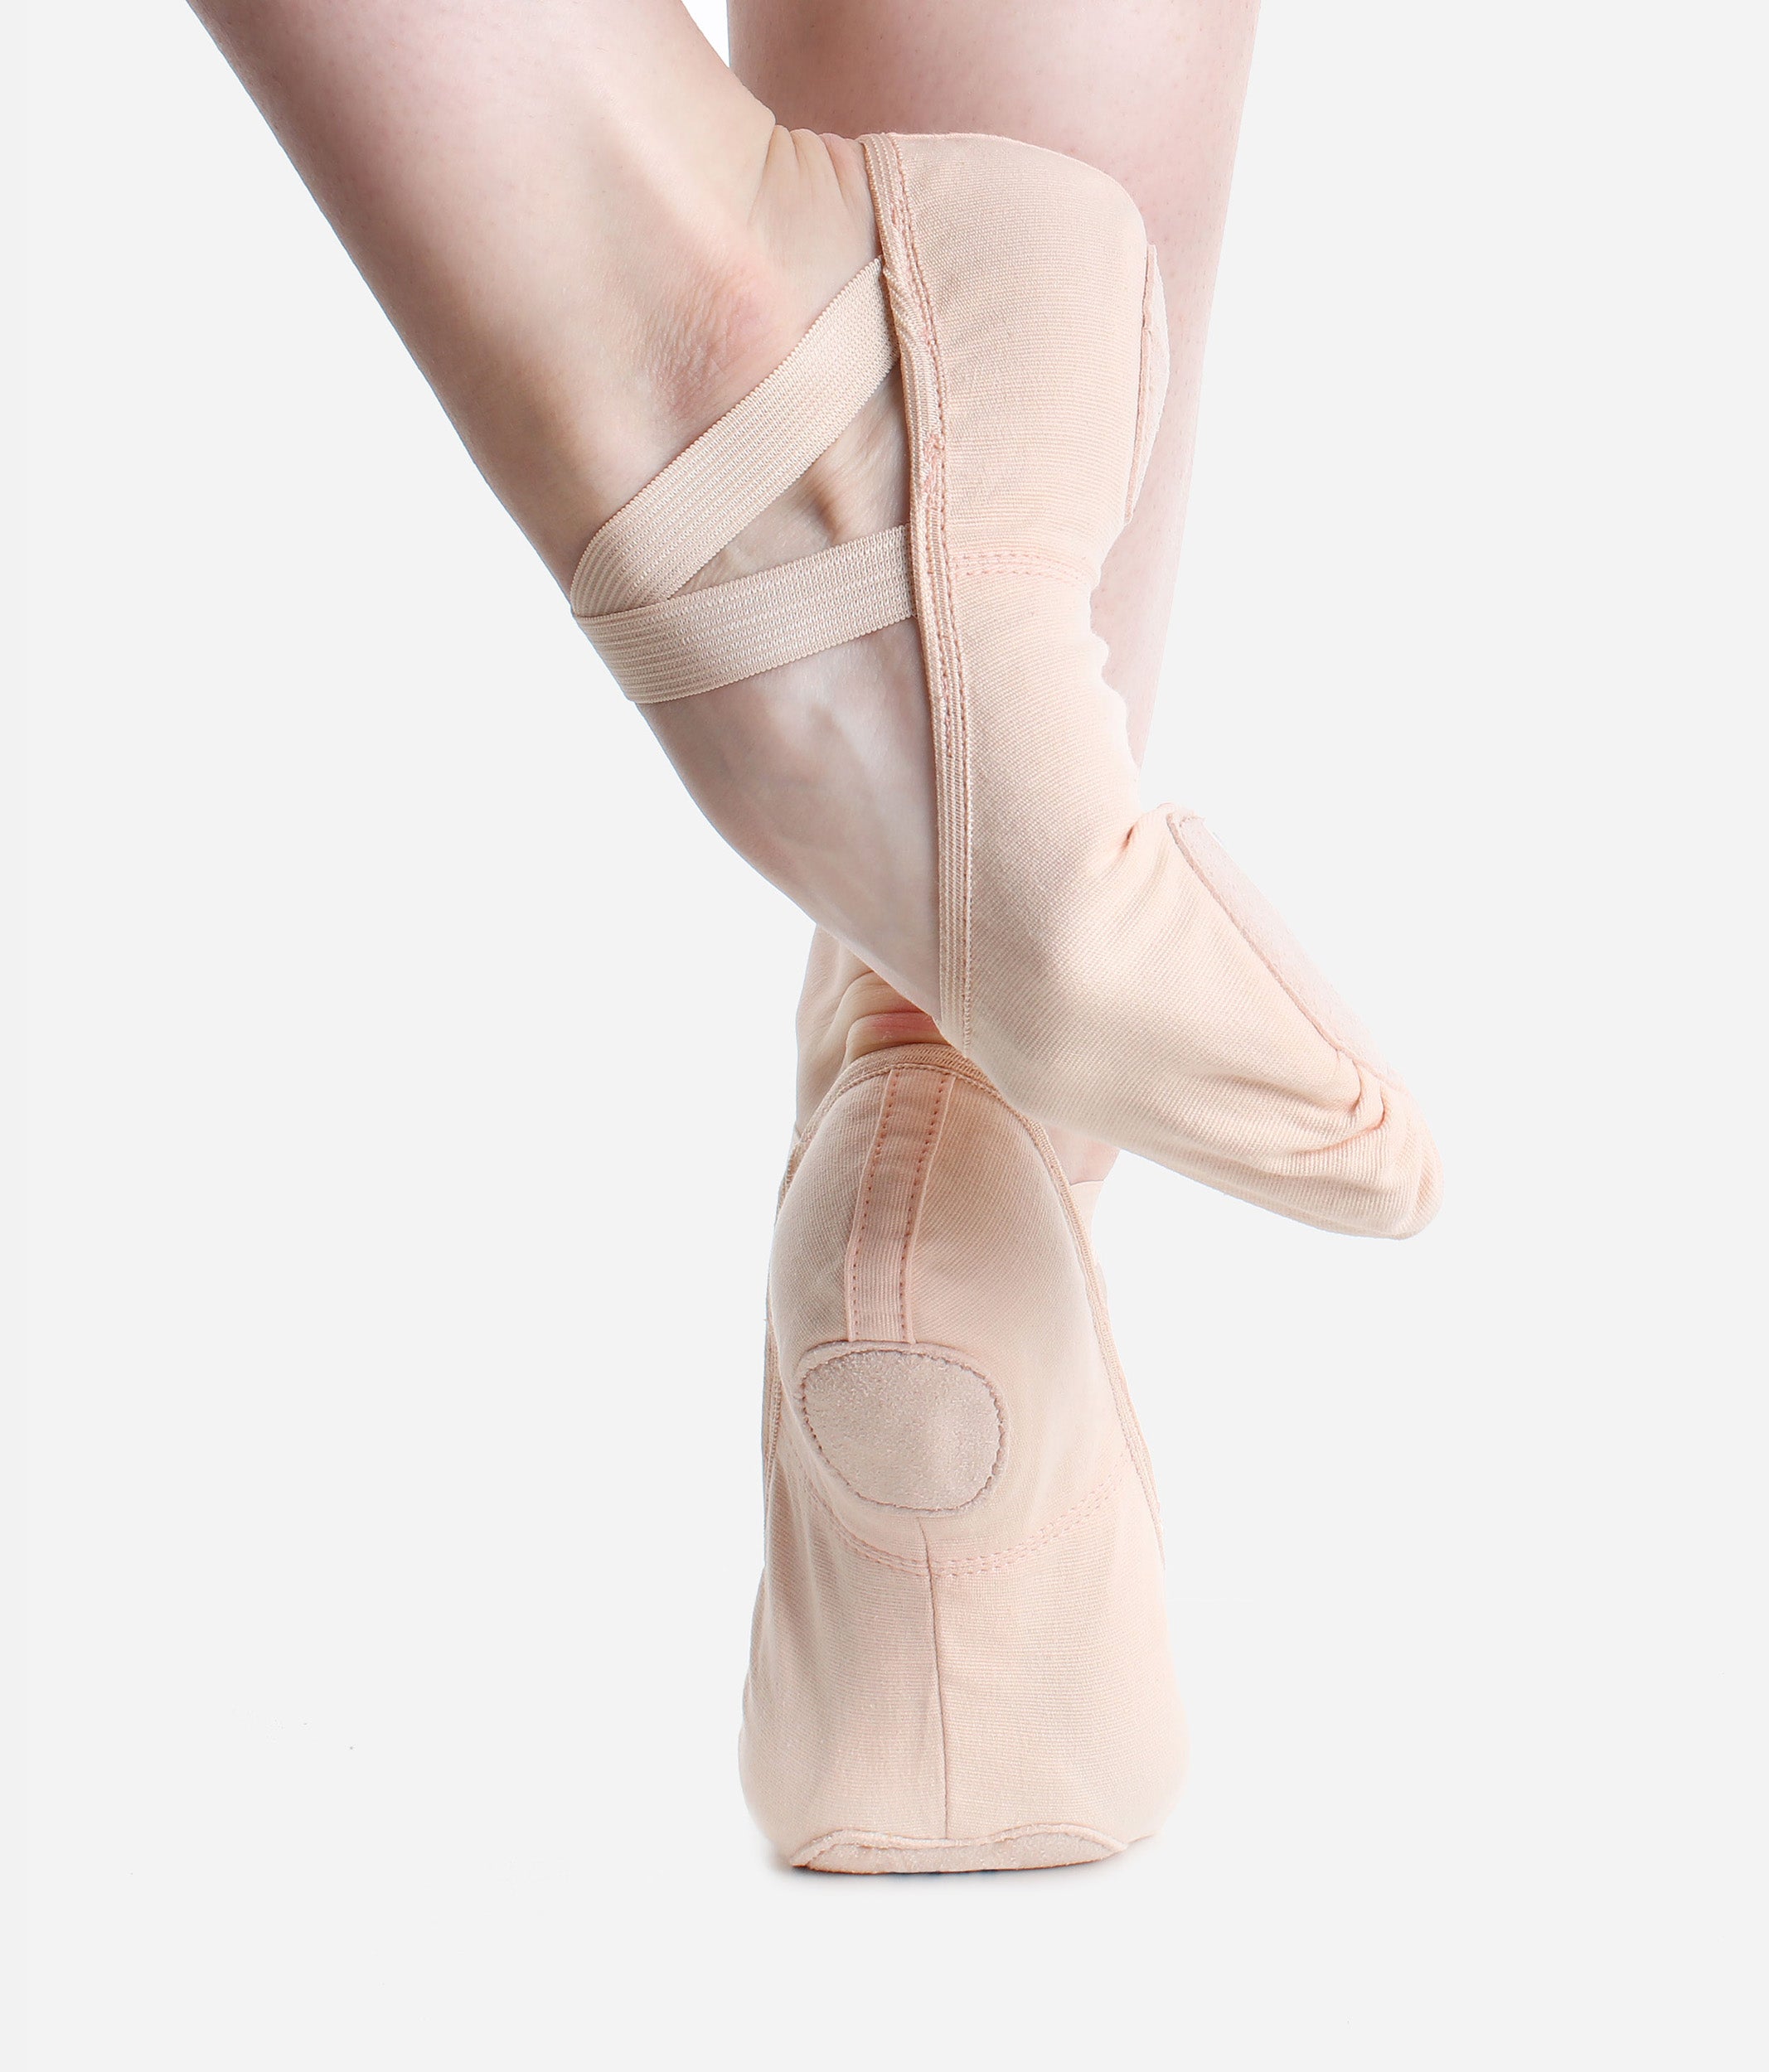 Medium Width, Stretch Canvas Ballet Flat - VEGAN SD 16